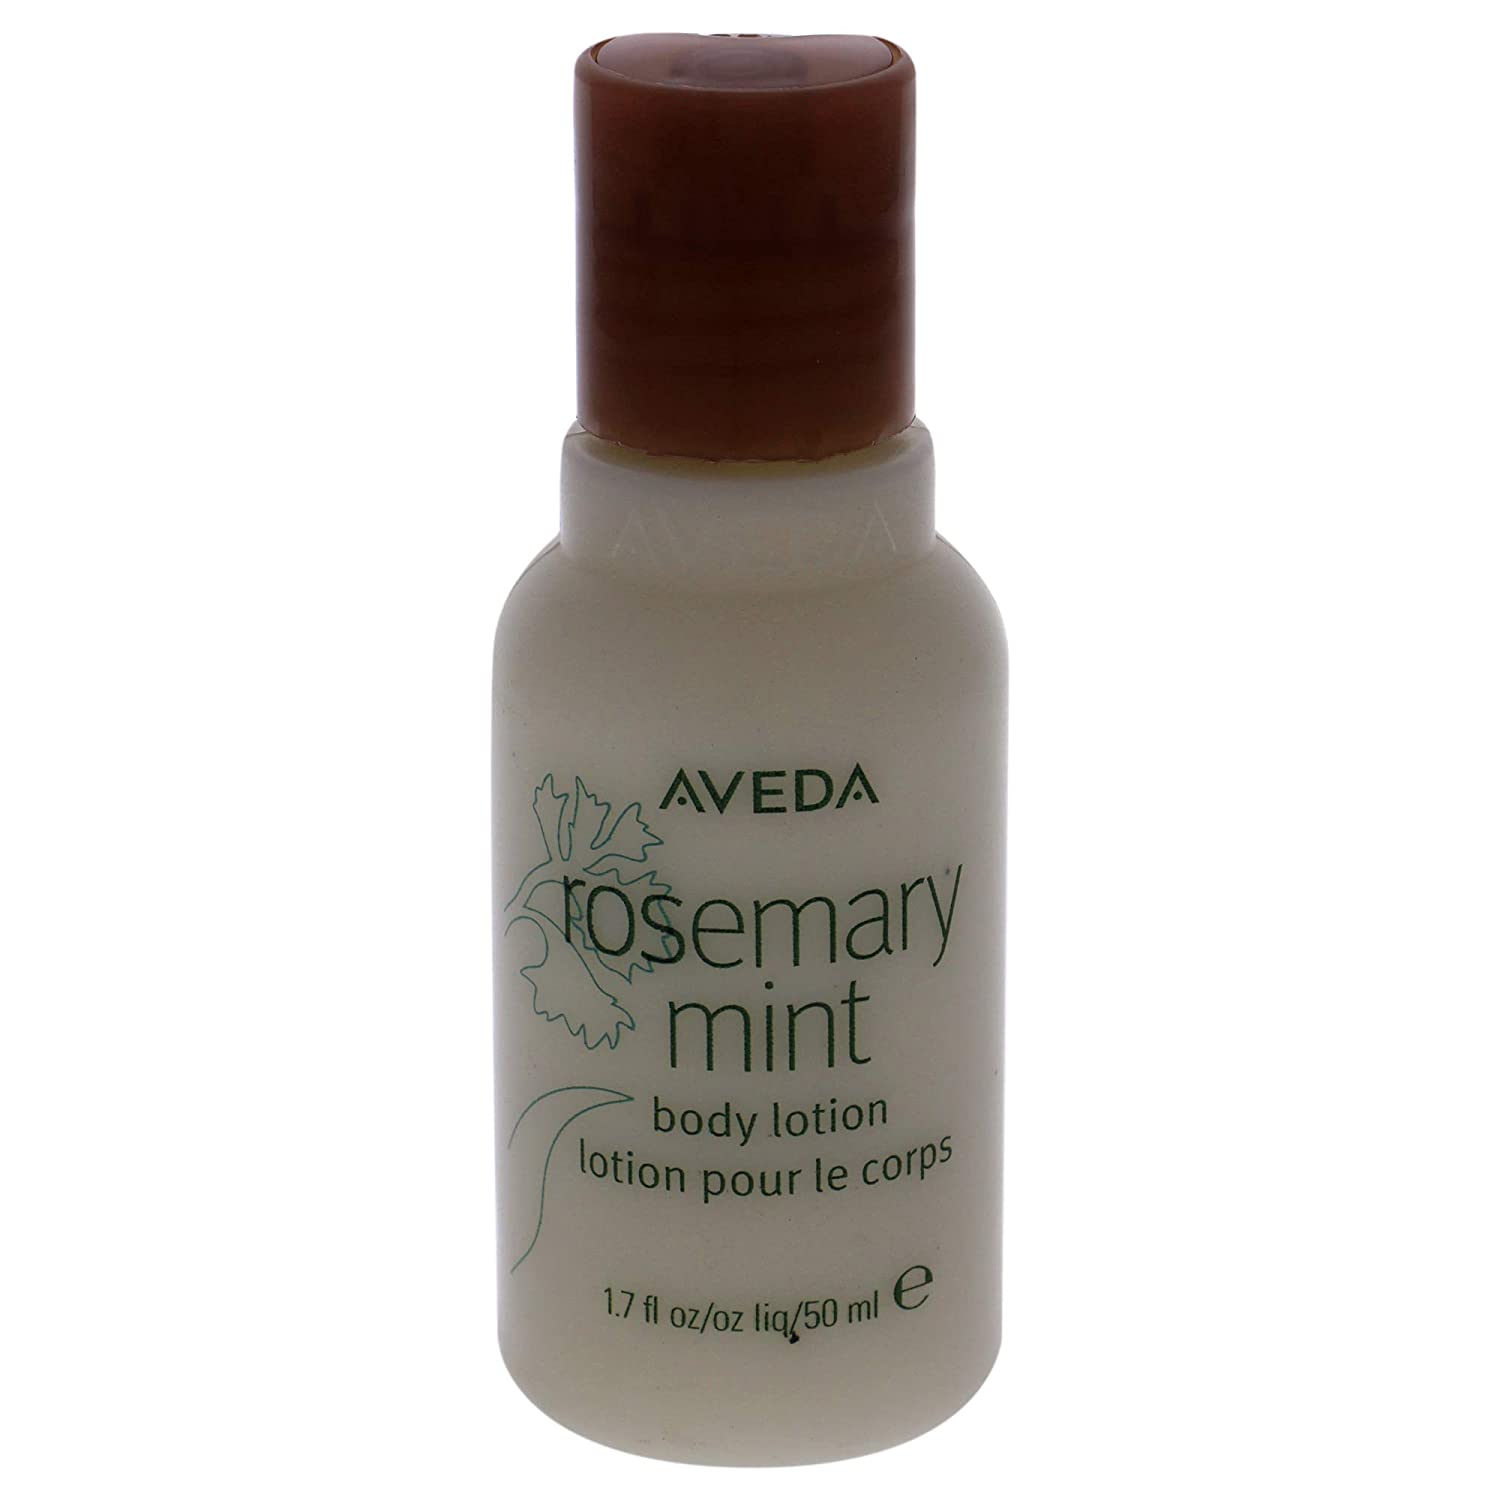 Aveda Rosemary Mint Body Lotion Travel Size 50 ml